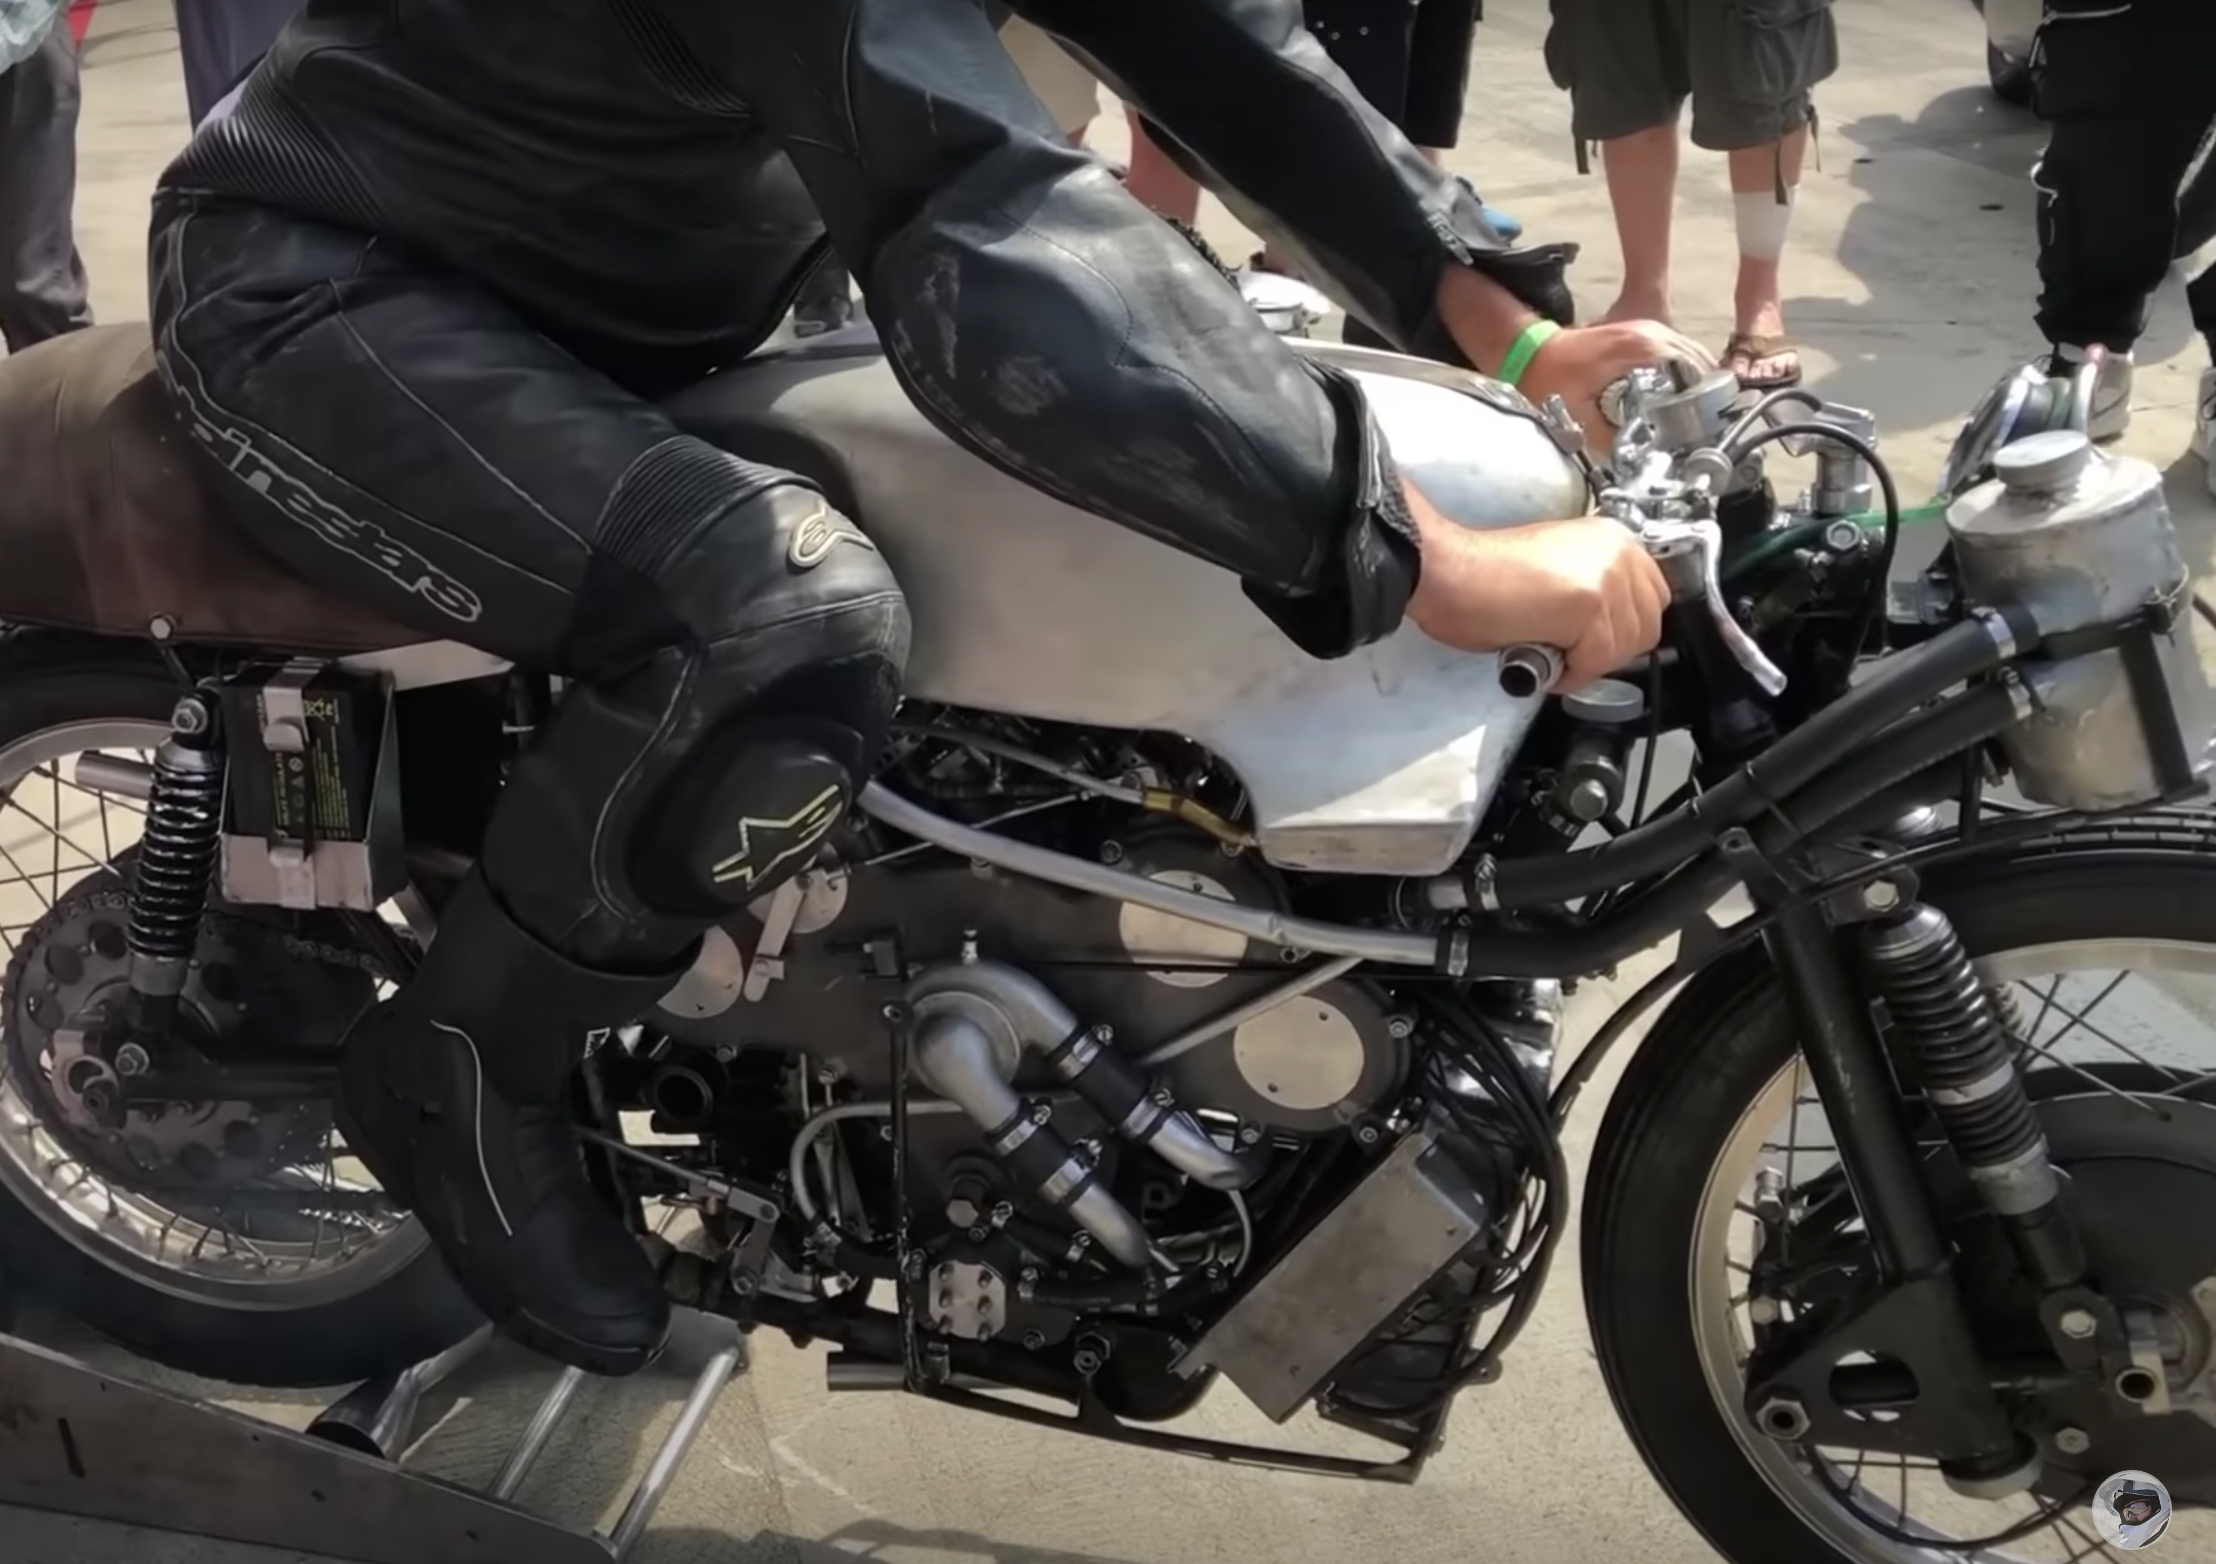 Load video: Moto Guzzi V8 under the skirt - quick service and engine start